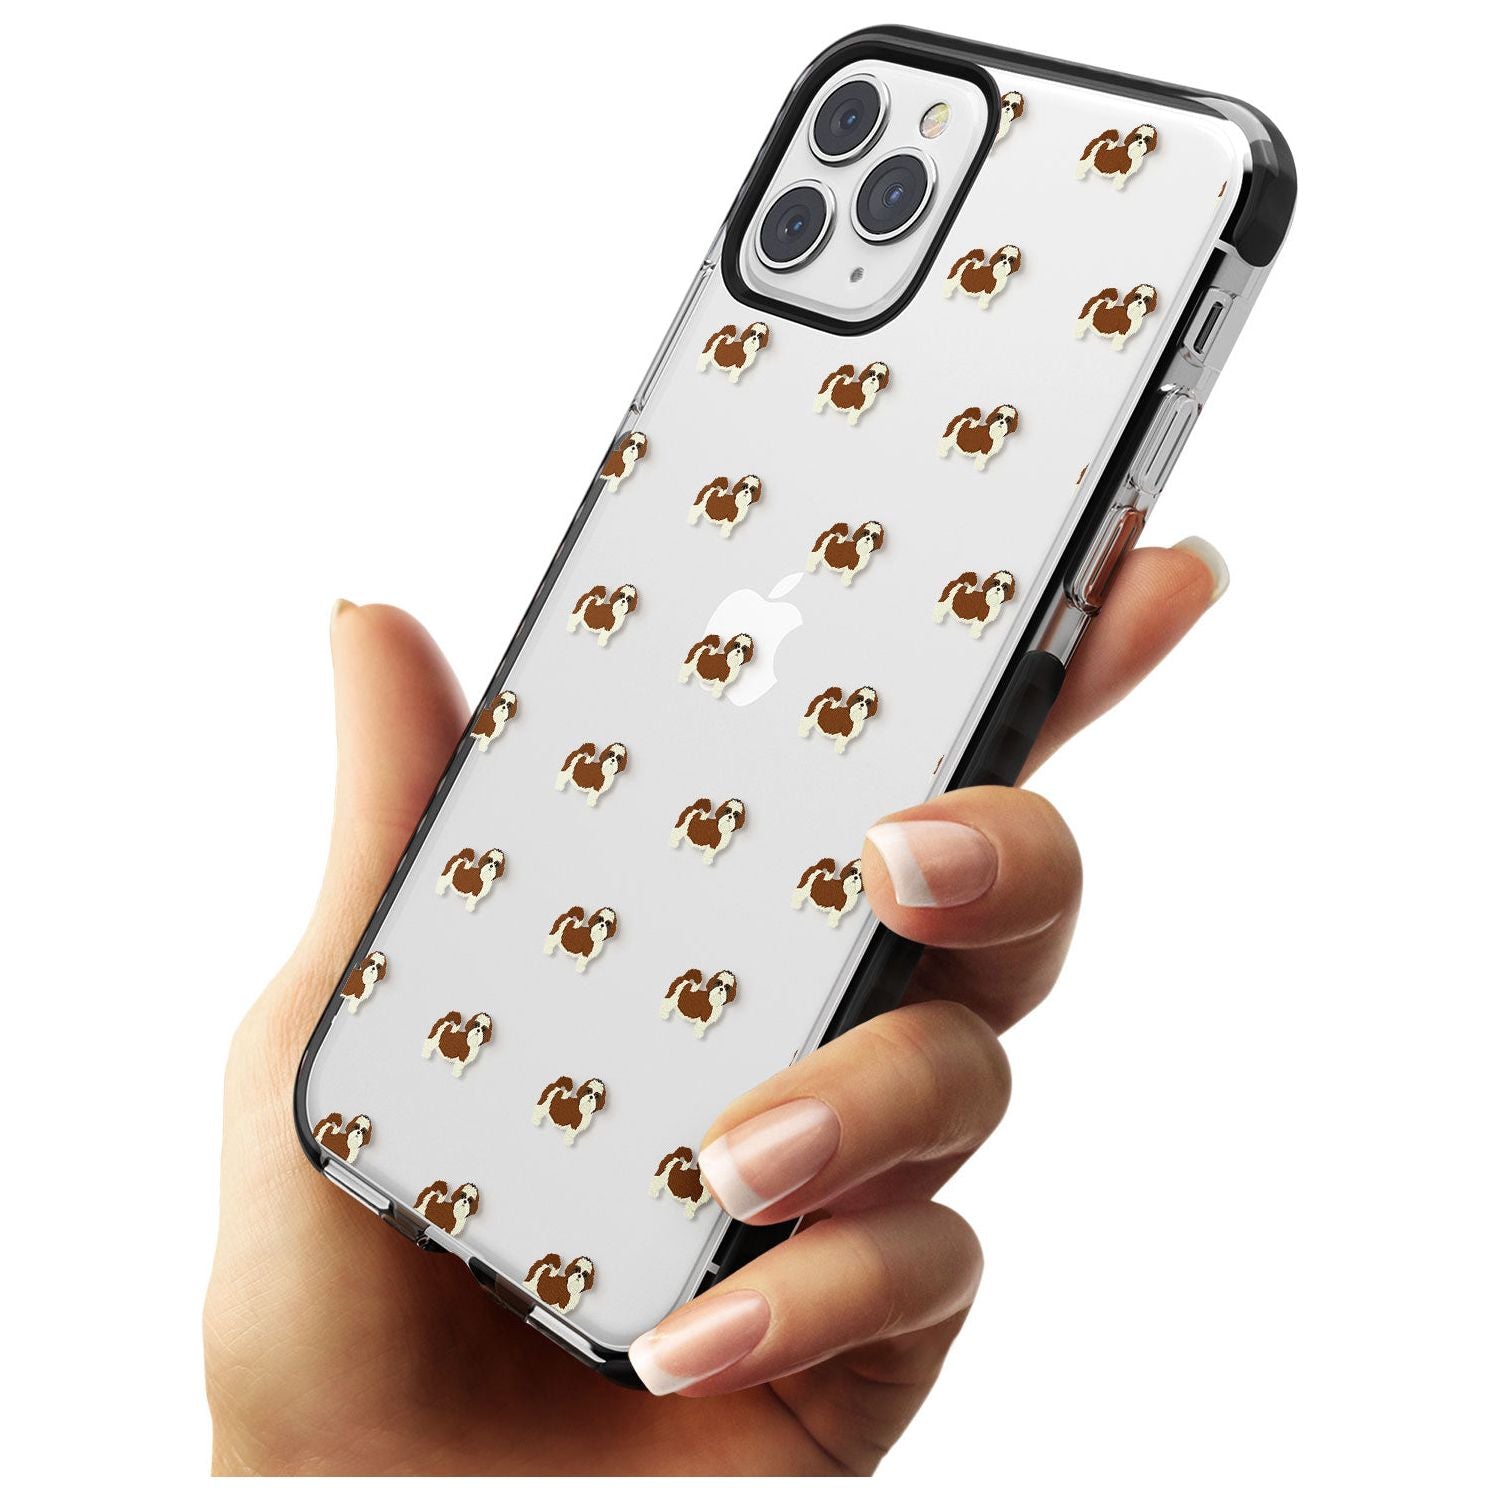 Shih Tzu Dog Pattern Clear Black Impact Phone Case for iPhone 11 Pro Max